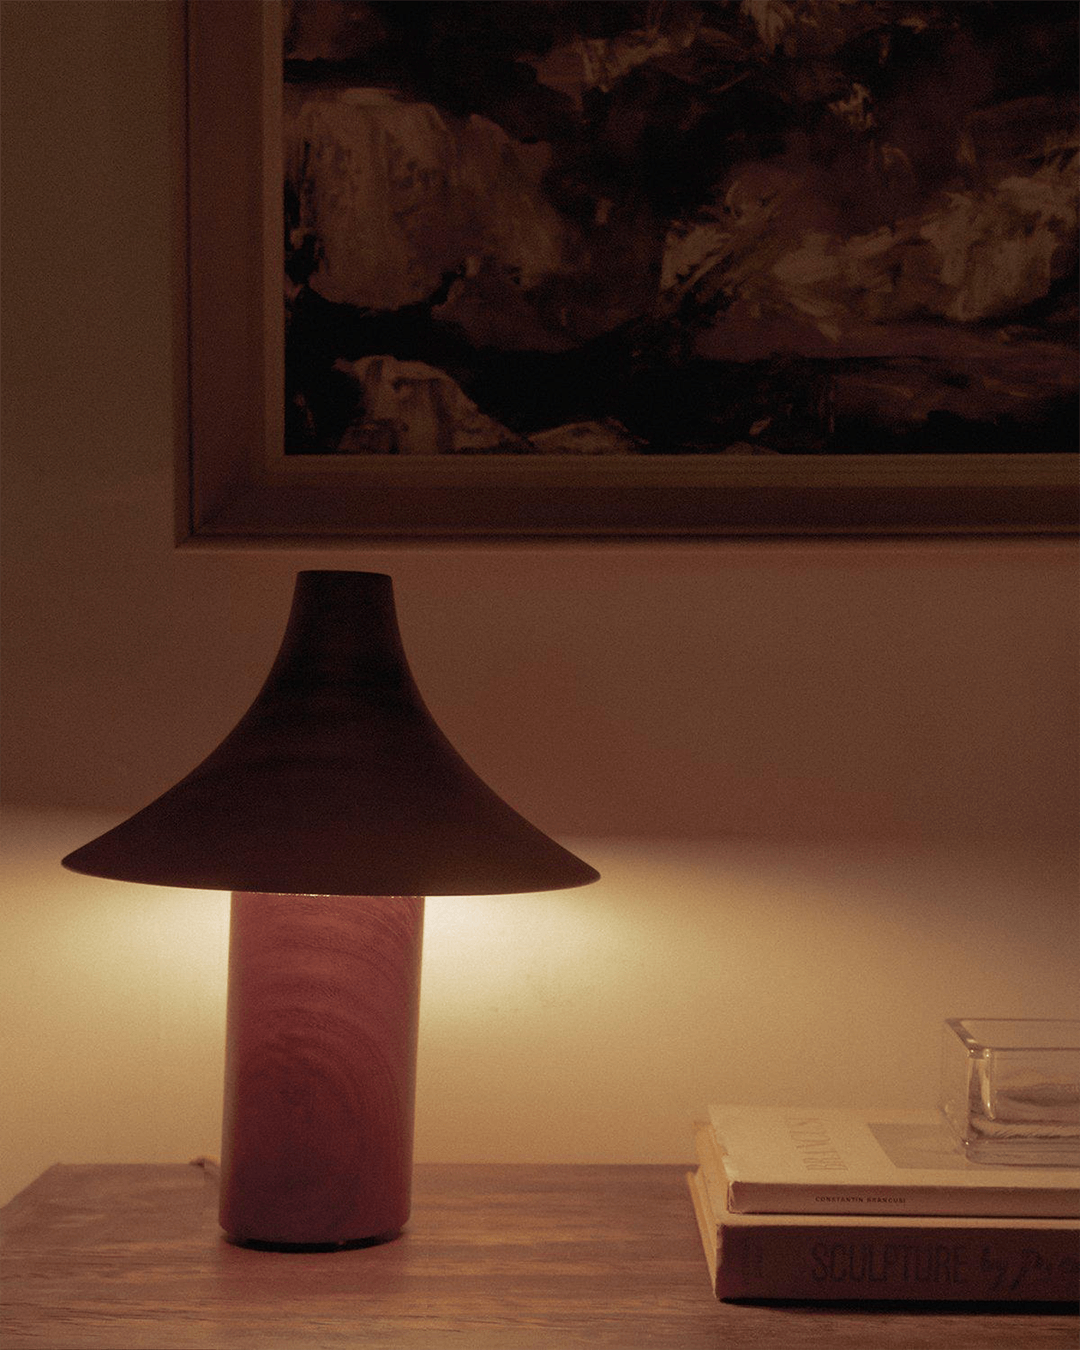 Kilzi lighting | Hat design table lamp for home decor, a elegant designer lamp of wood soft organic shapes